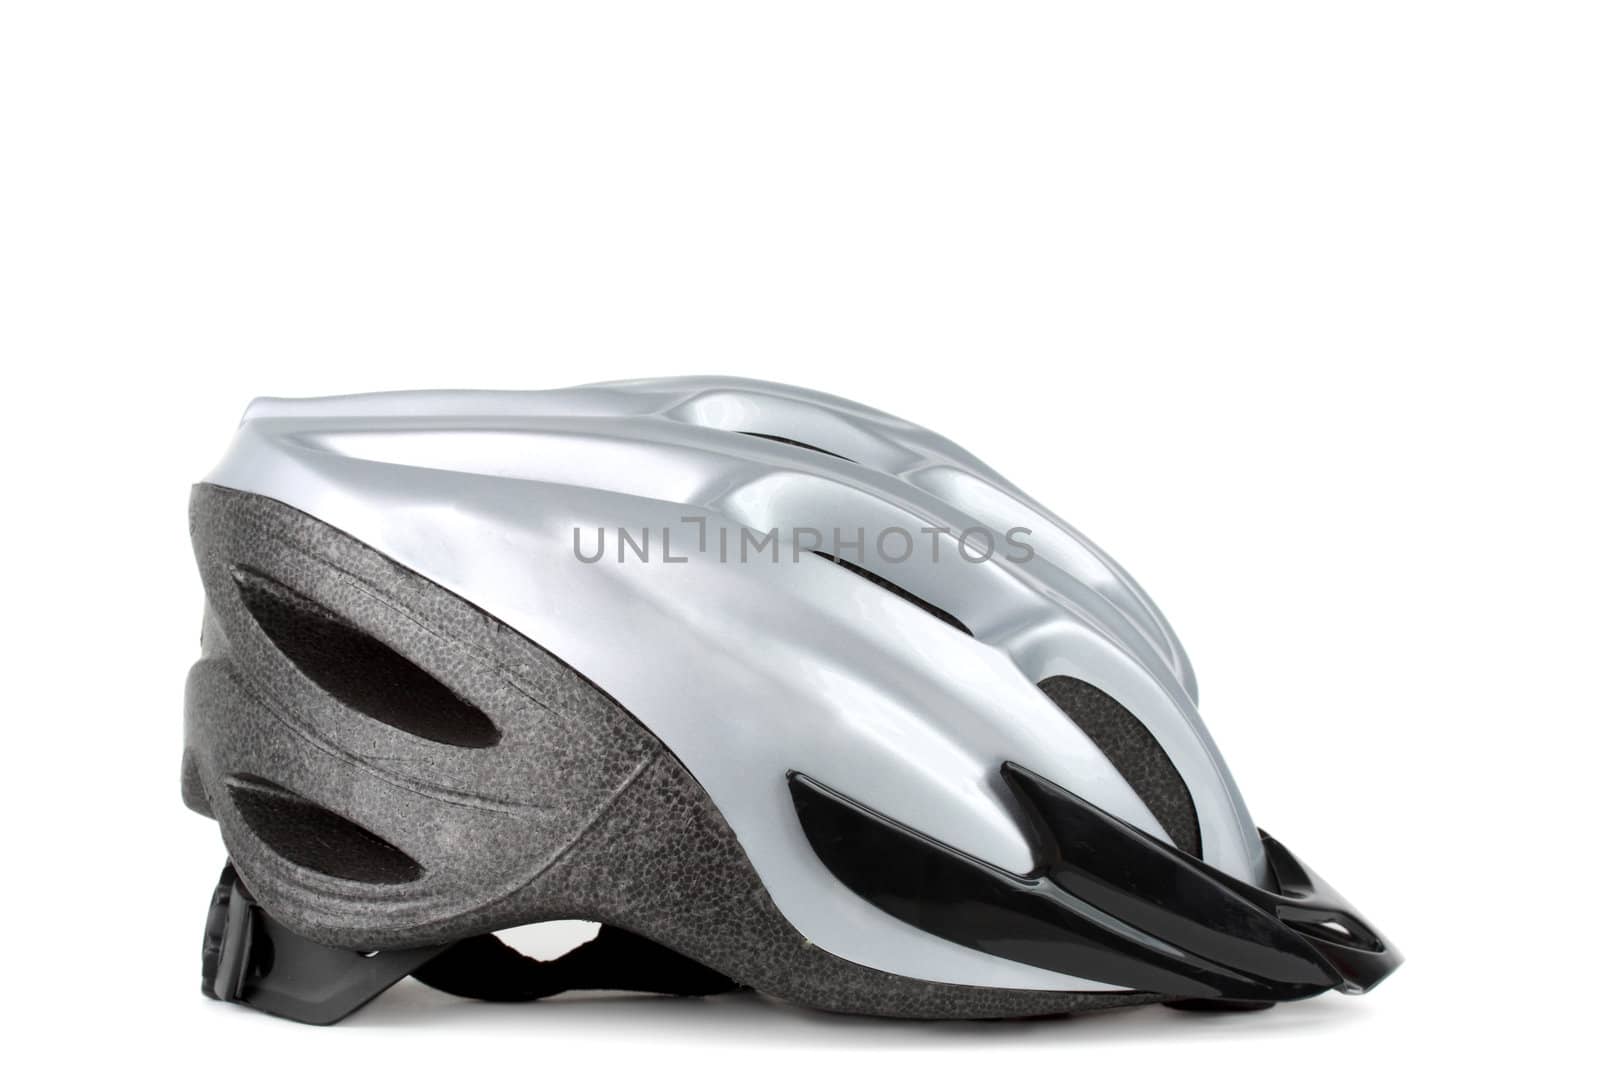 grey bicycle helmet isolated on white background